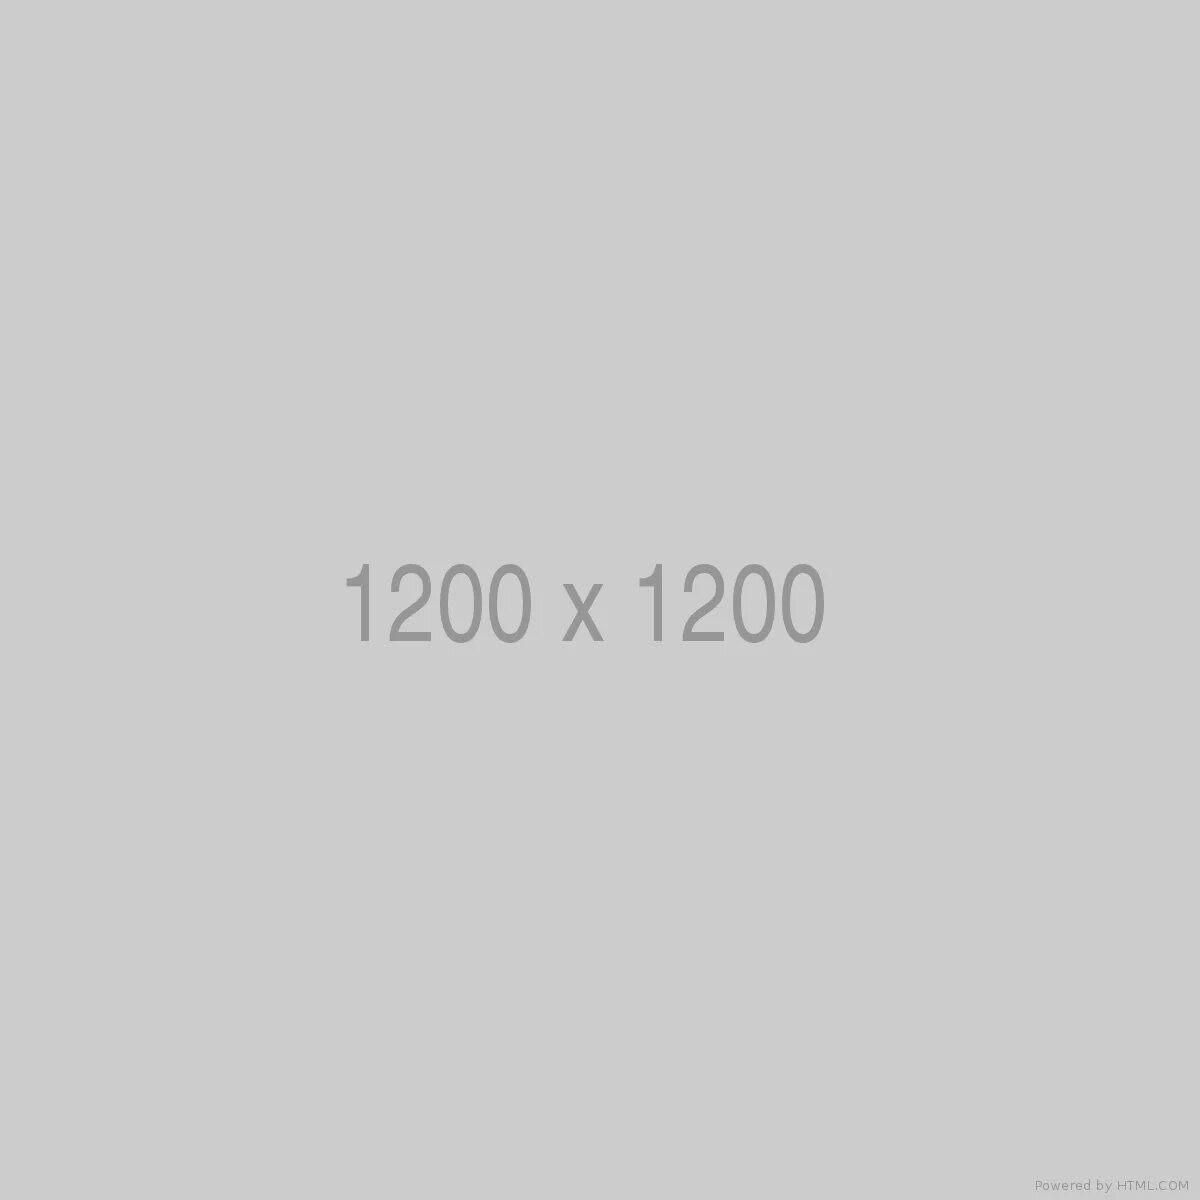 200 10 99. 200 На 200. 200 На 200 пикселей. Изображение 200x200. 200x200 картинки.